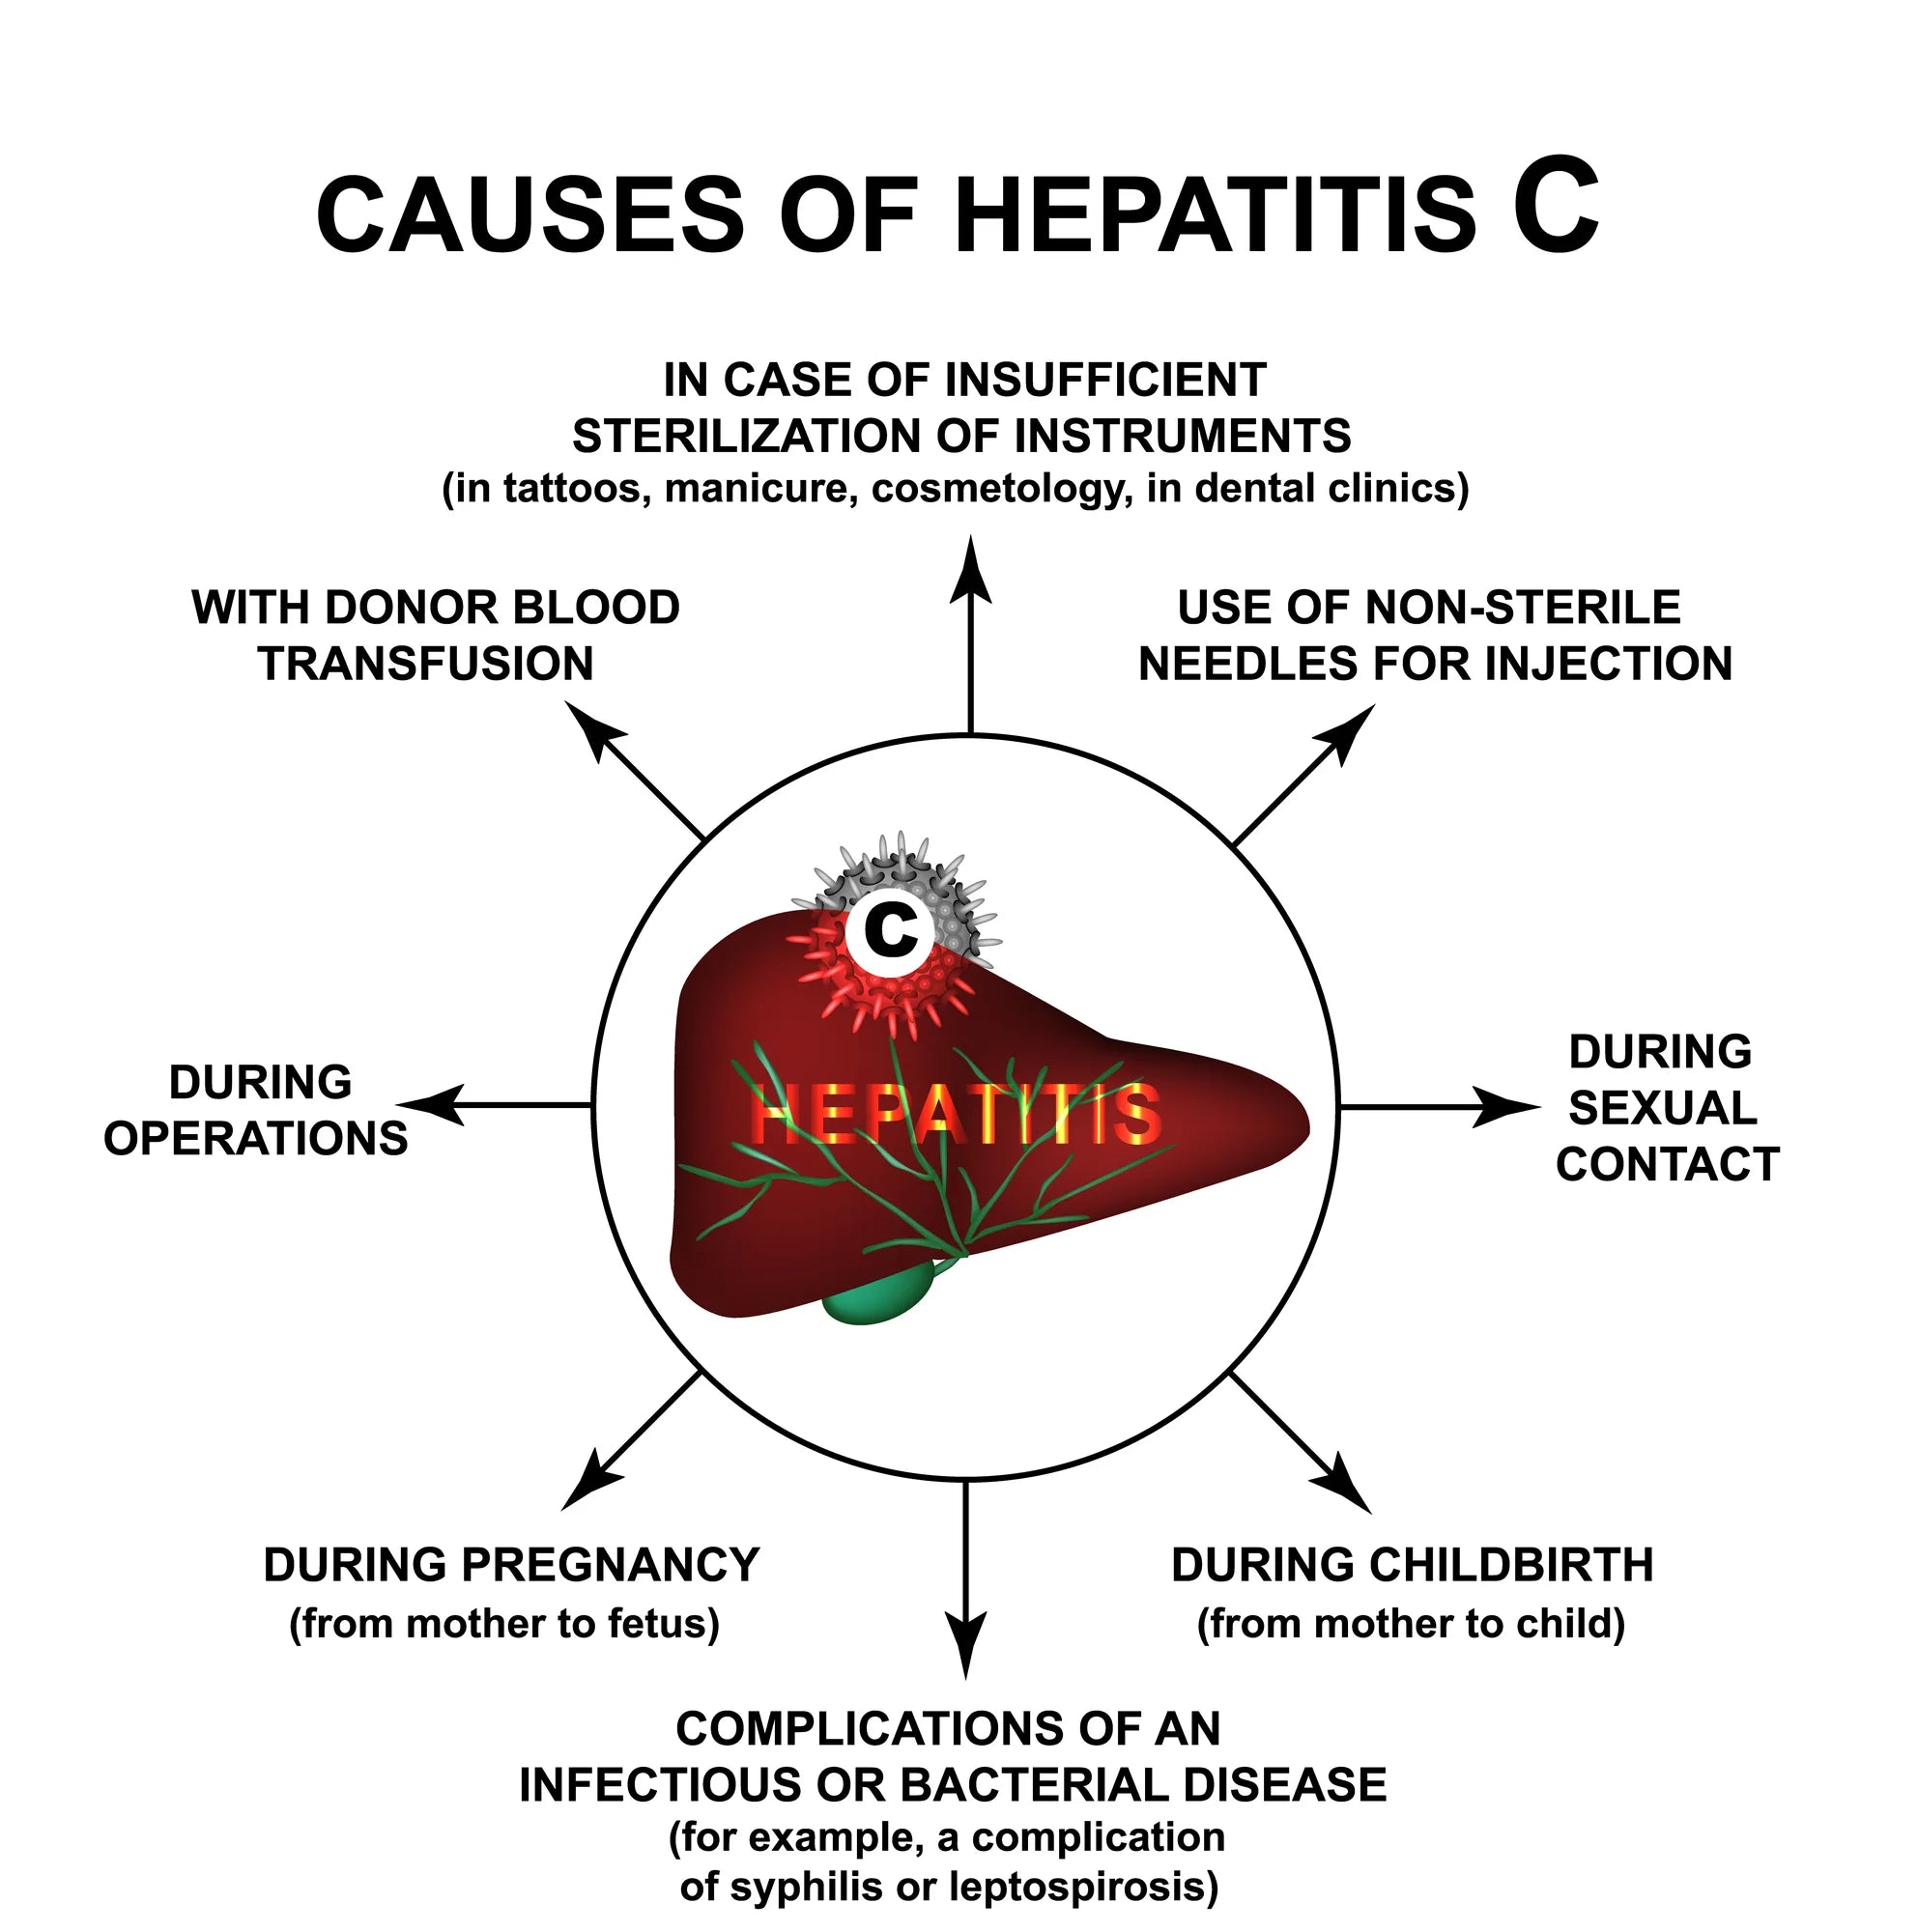 Cause of hepatitis C